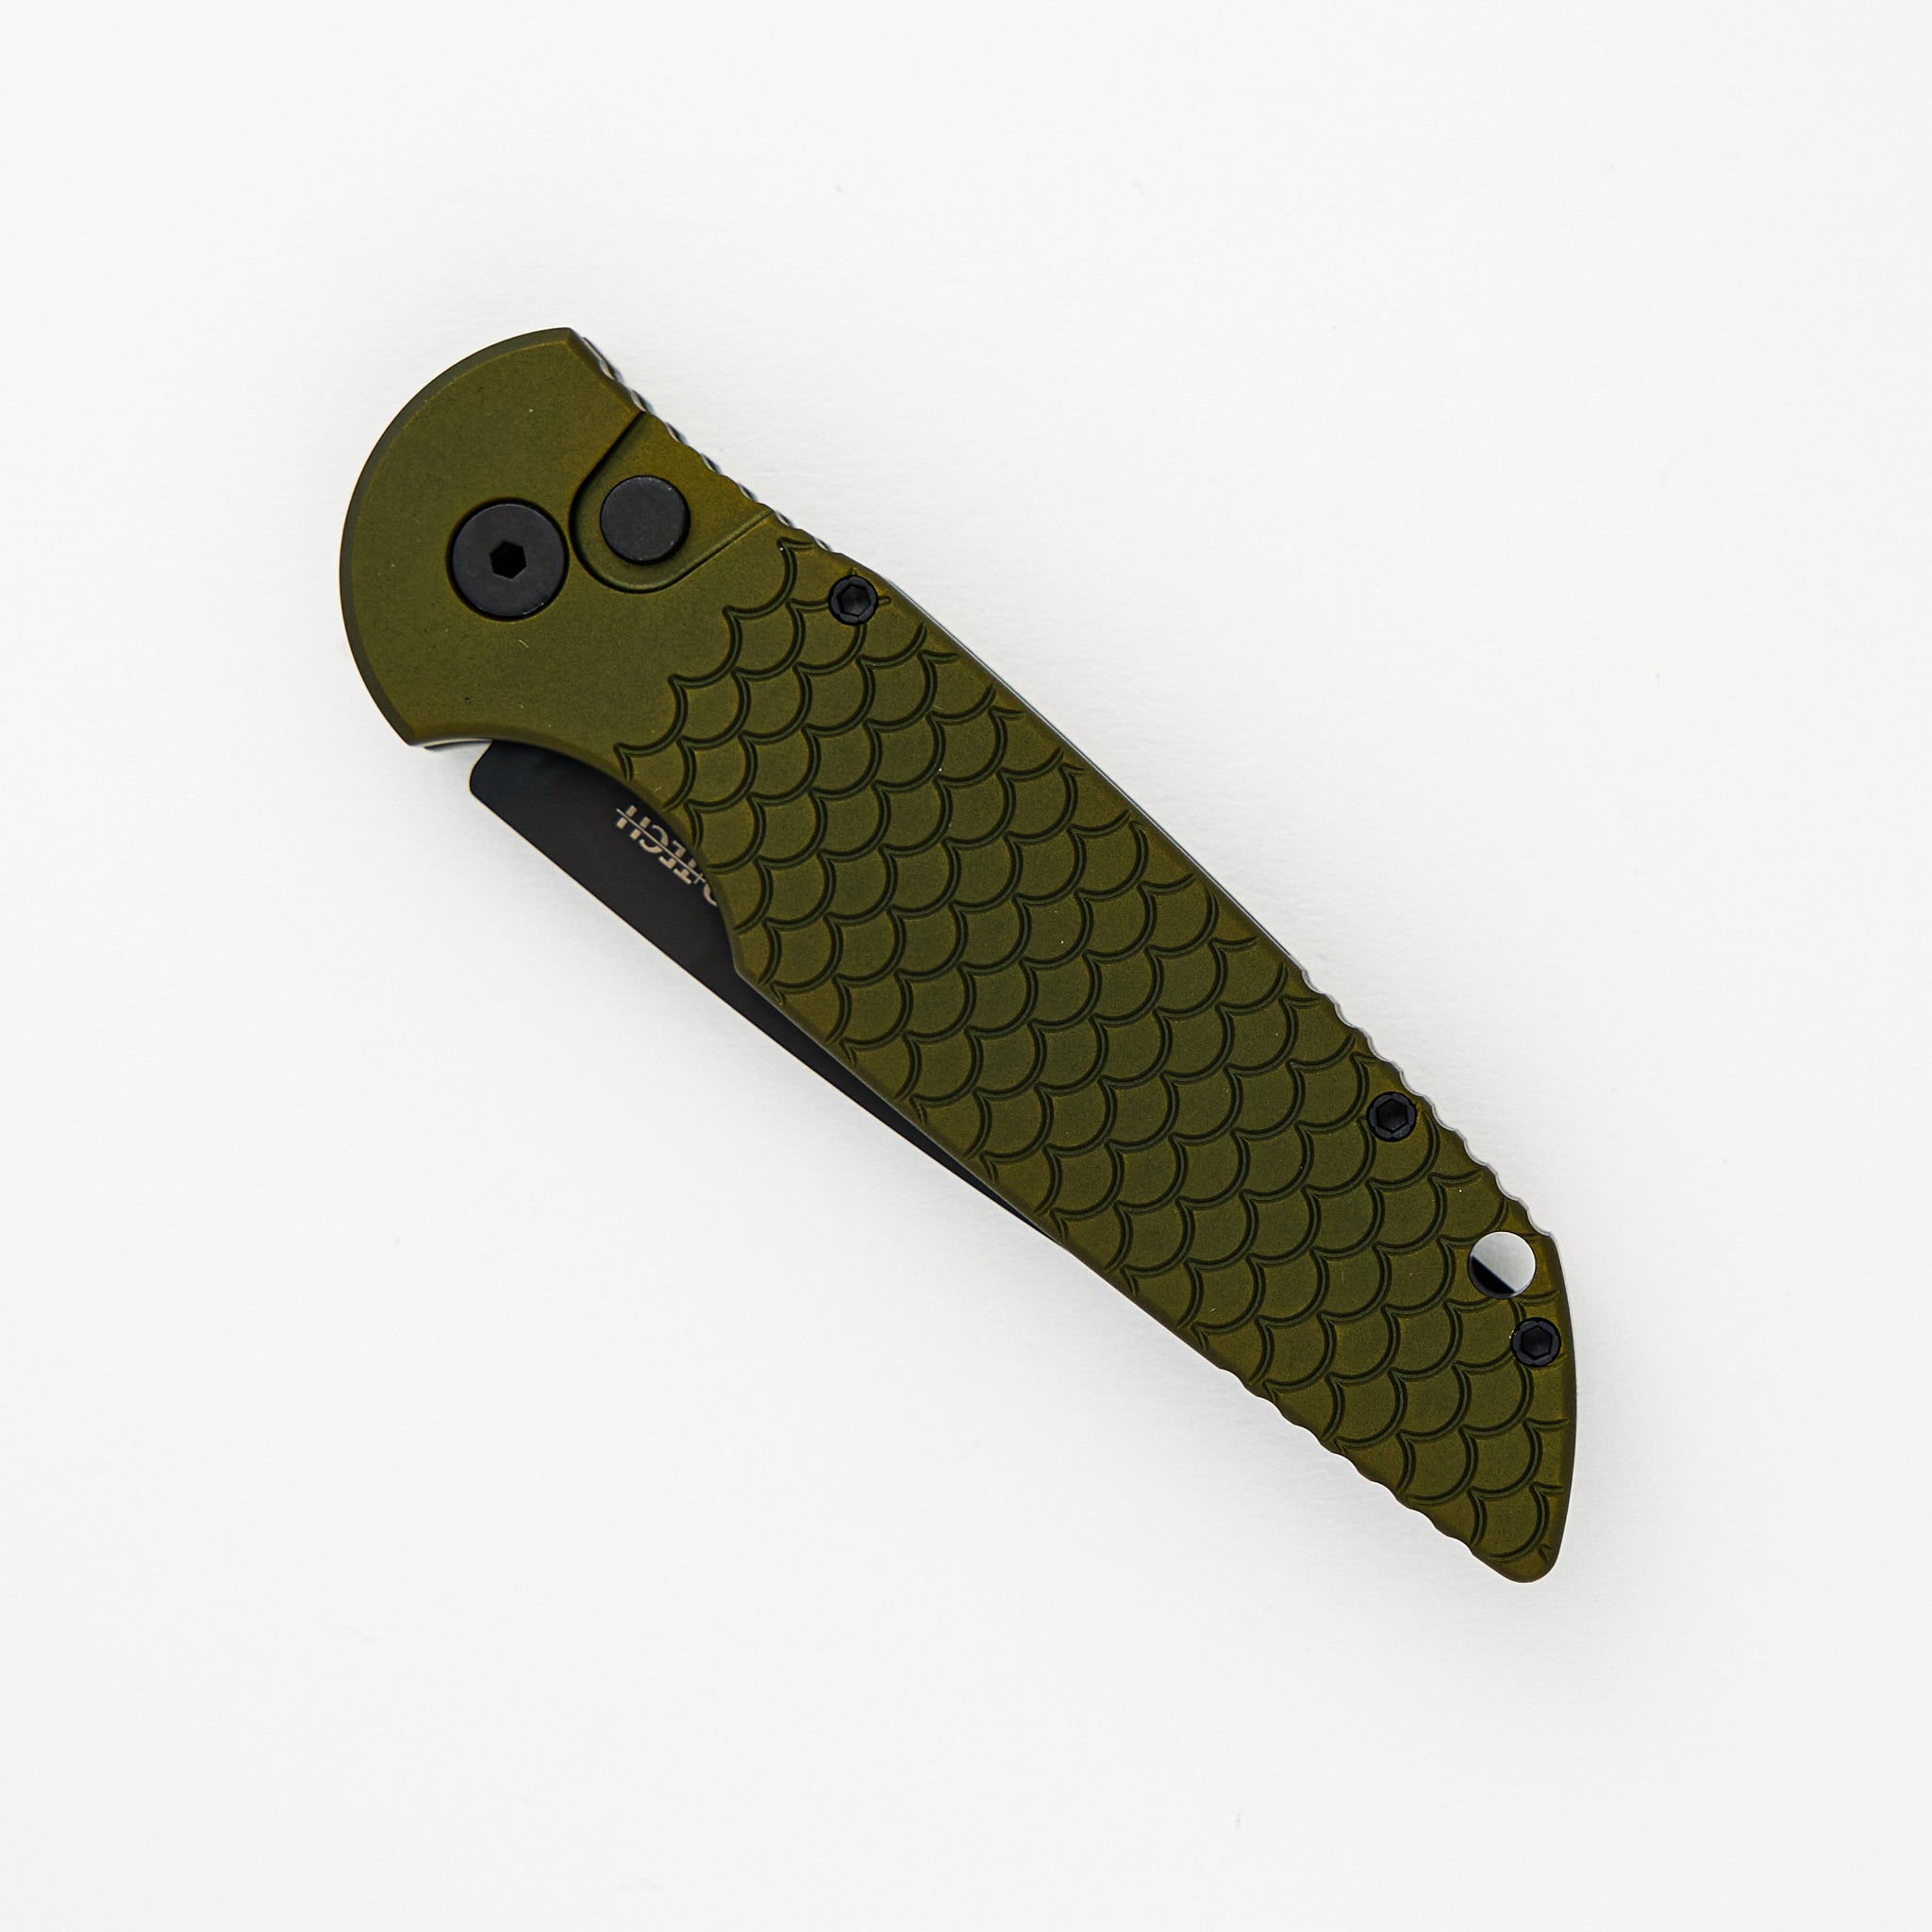 Pro-Tech Knives Tactical Response 3 – Green “Fish Scale” Aluminum Handle – Sterile Black 154CM Blade TR-3 X1